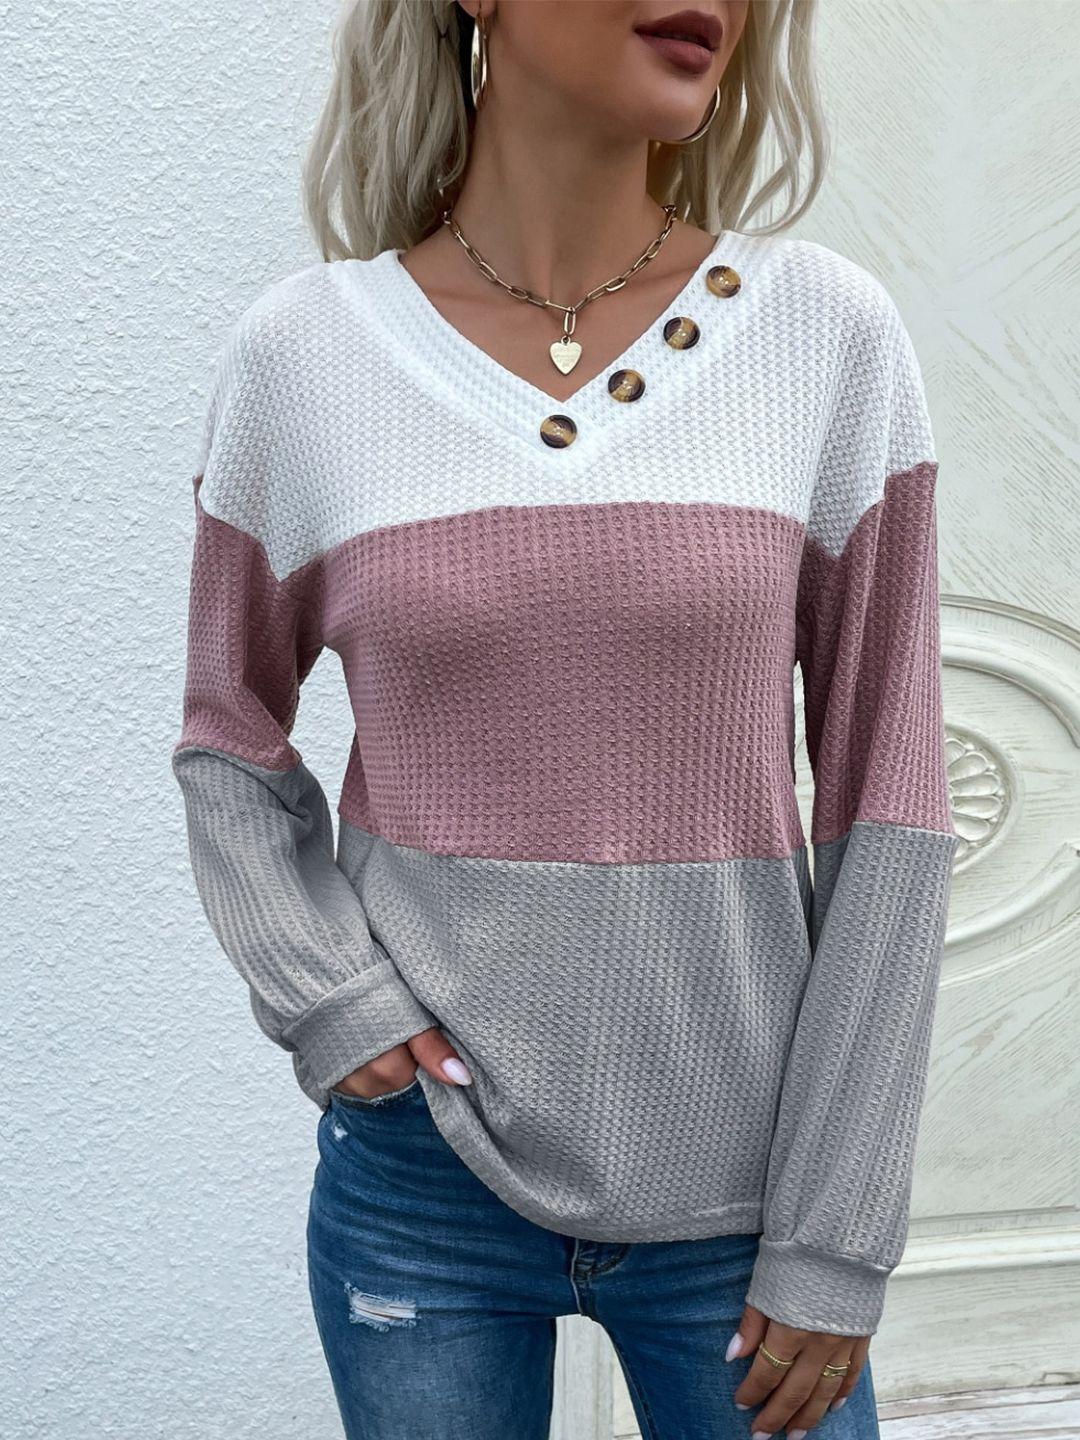 stylecast grey & white colourblocked v-neck cotton pullover